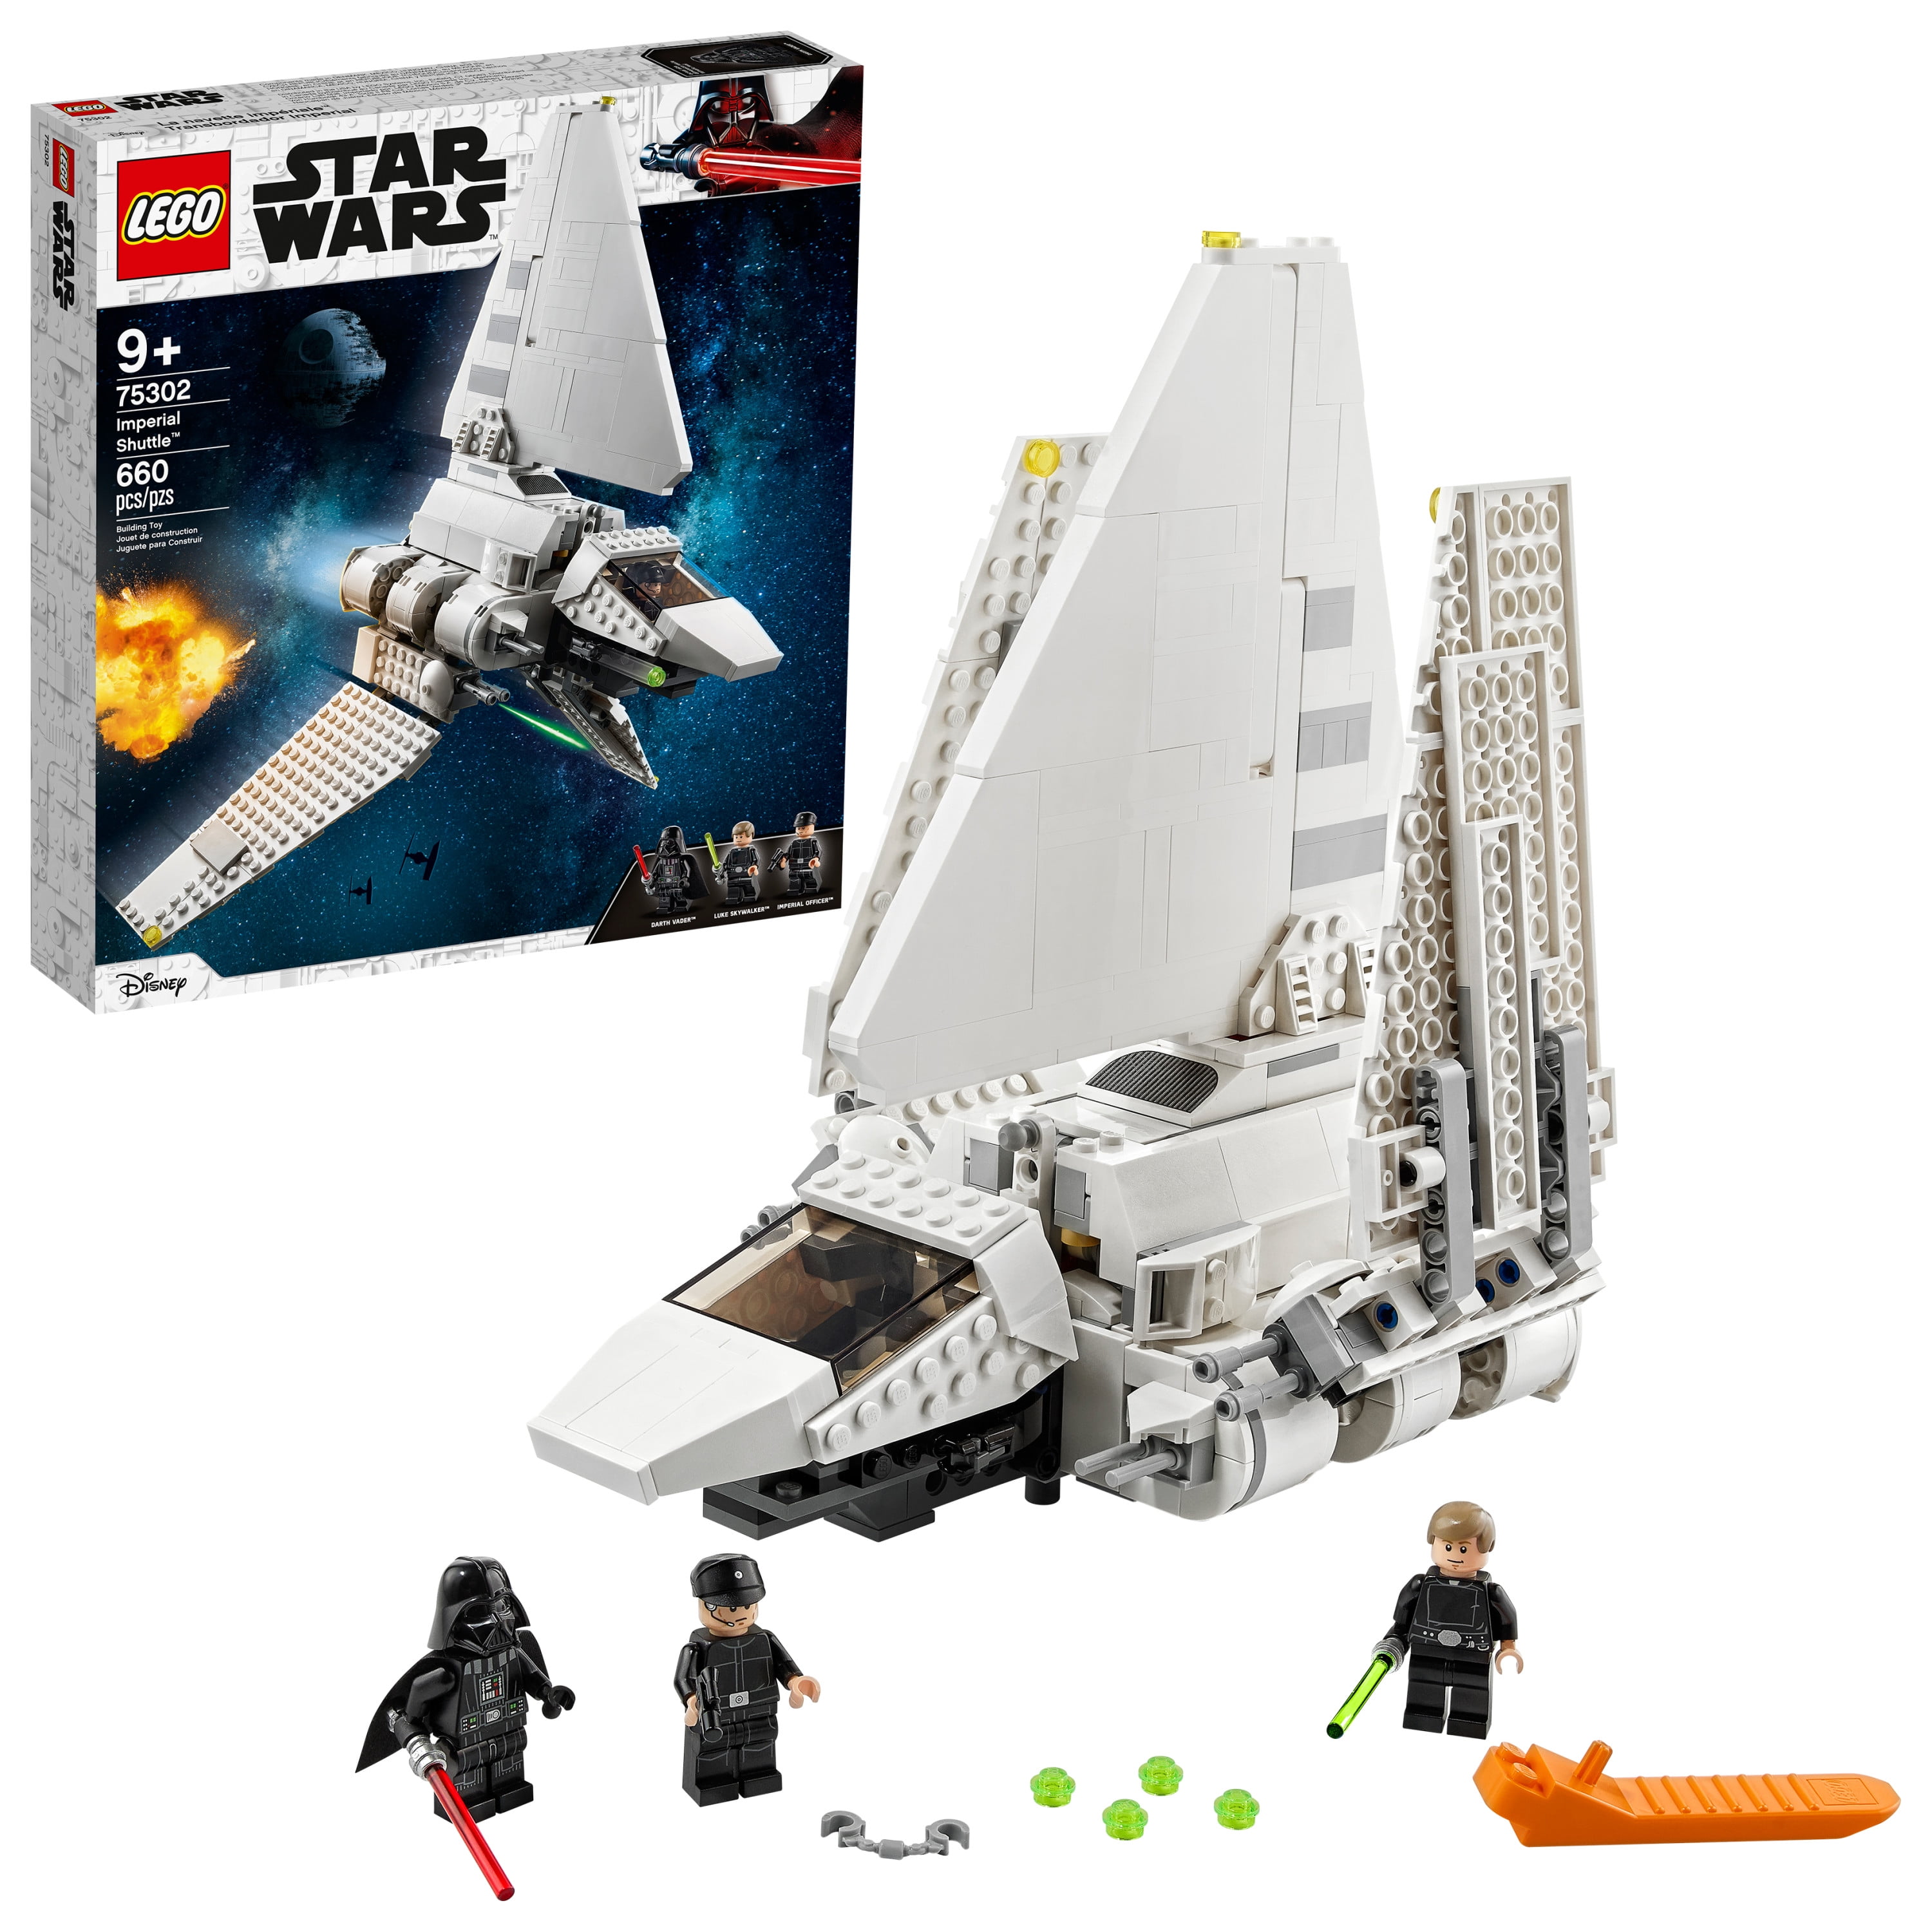 commando BES tegel LEGO Star Wars Imperial Shuttle 75302 Building Toy (660 Pieces) -  Walmart.com